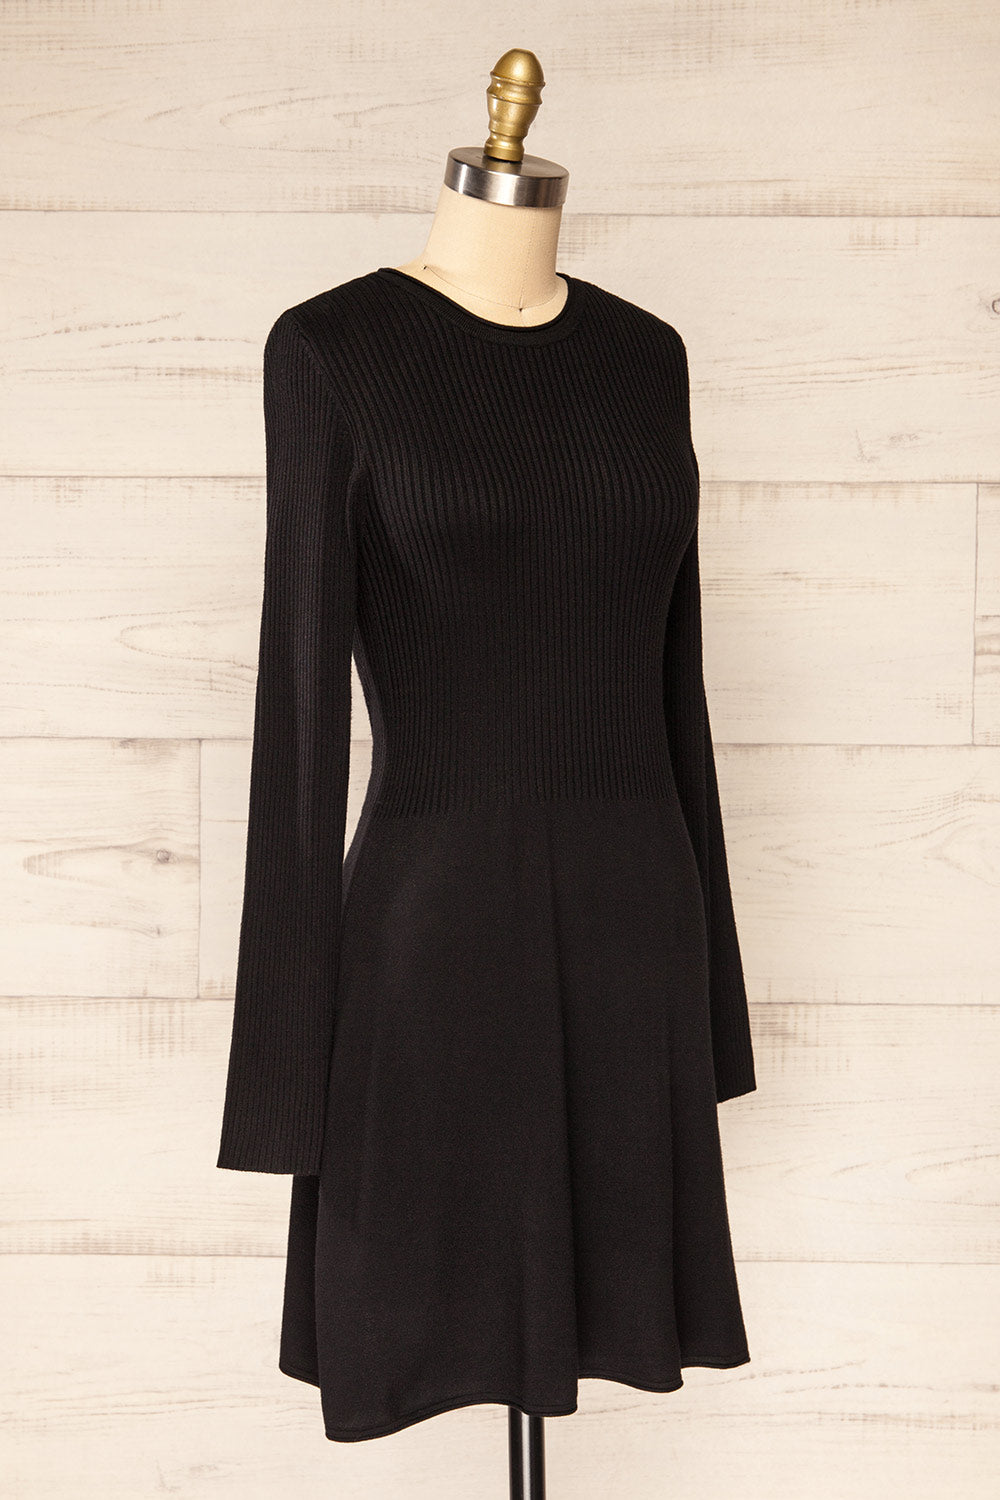 Gitega Short Rib-Knit Black Dress w/ Long Sleeves | La petite garçonne side view